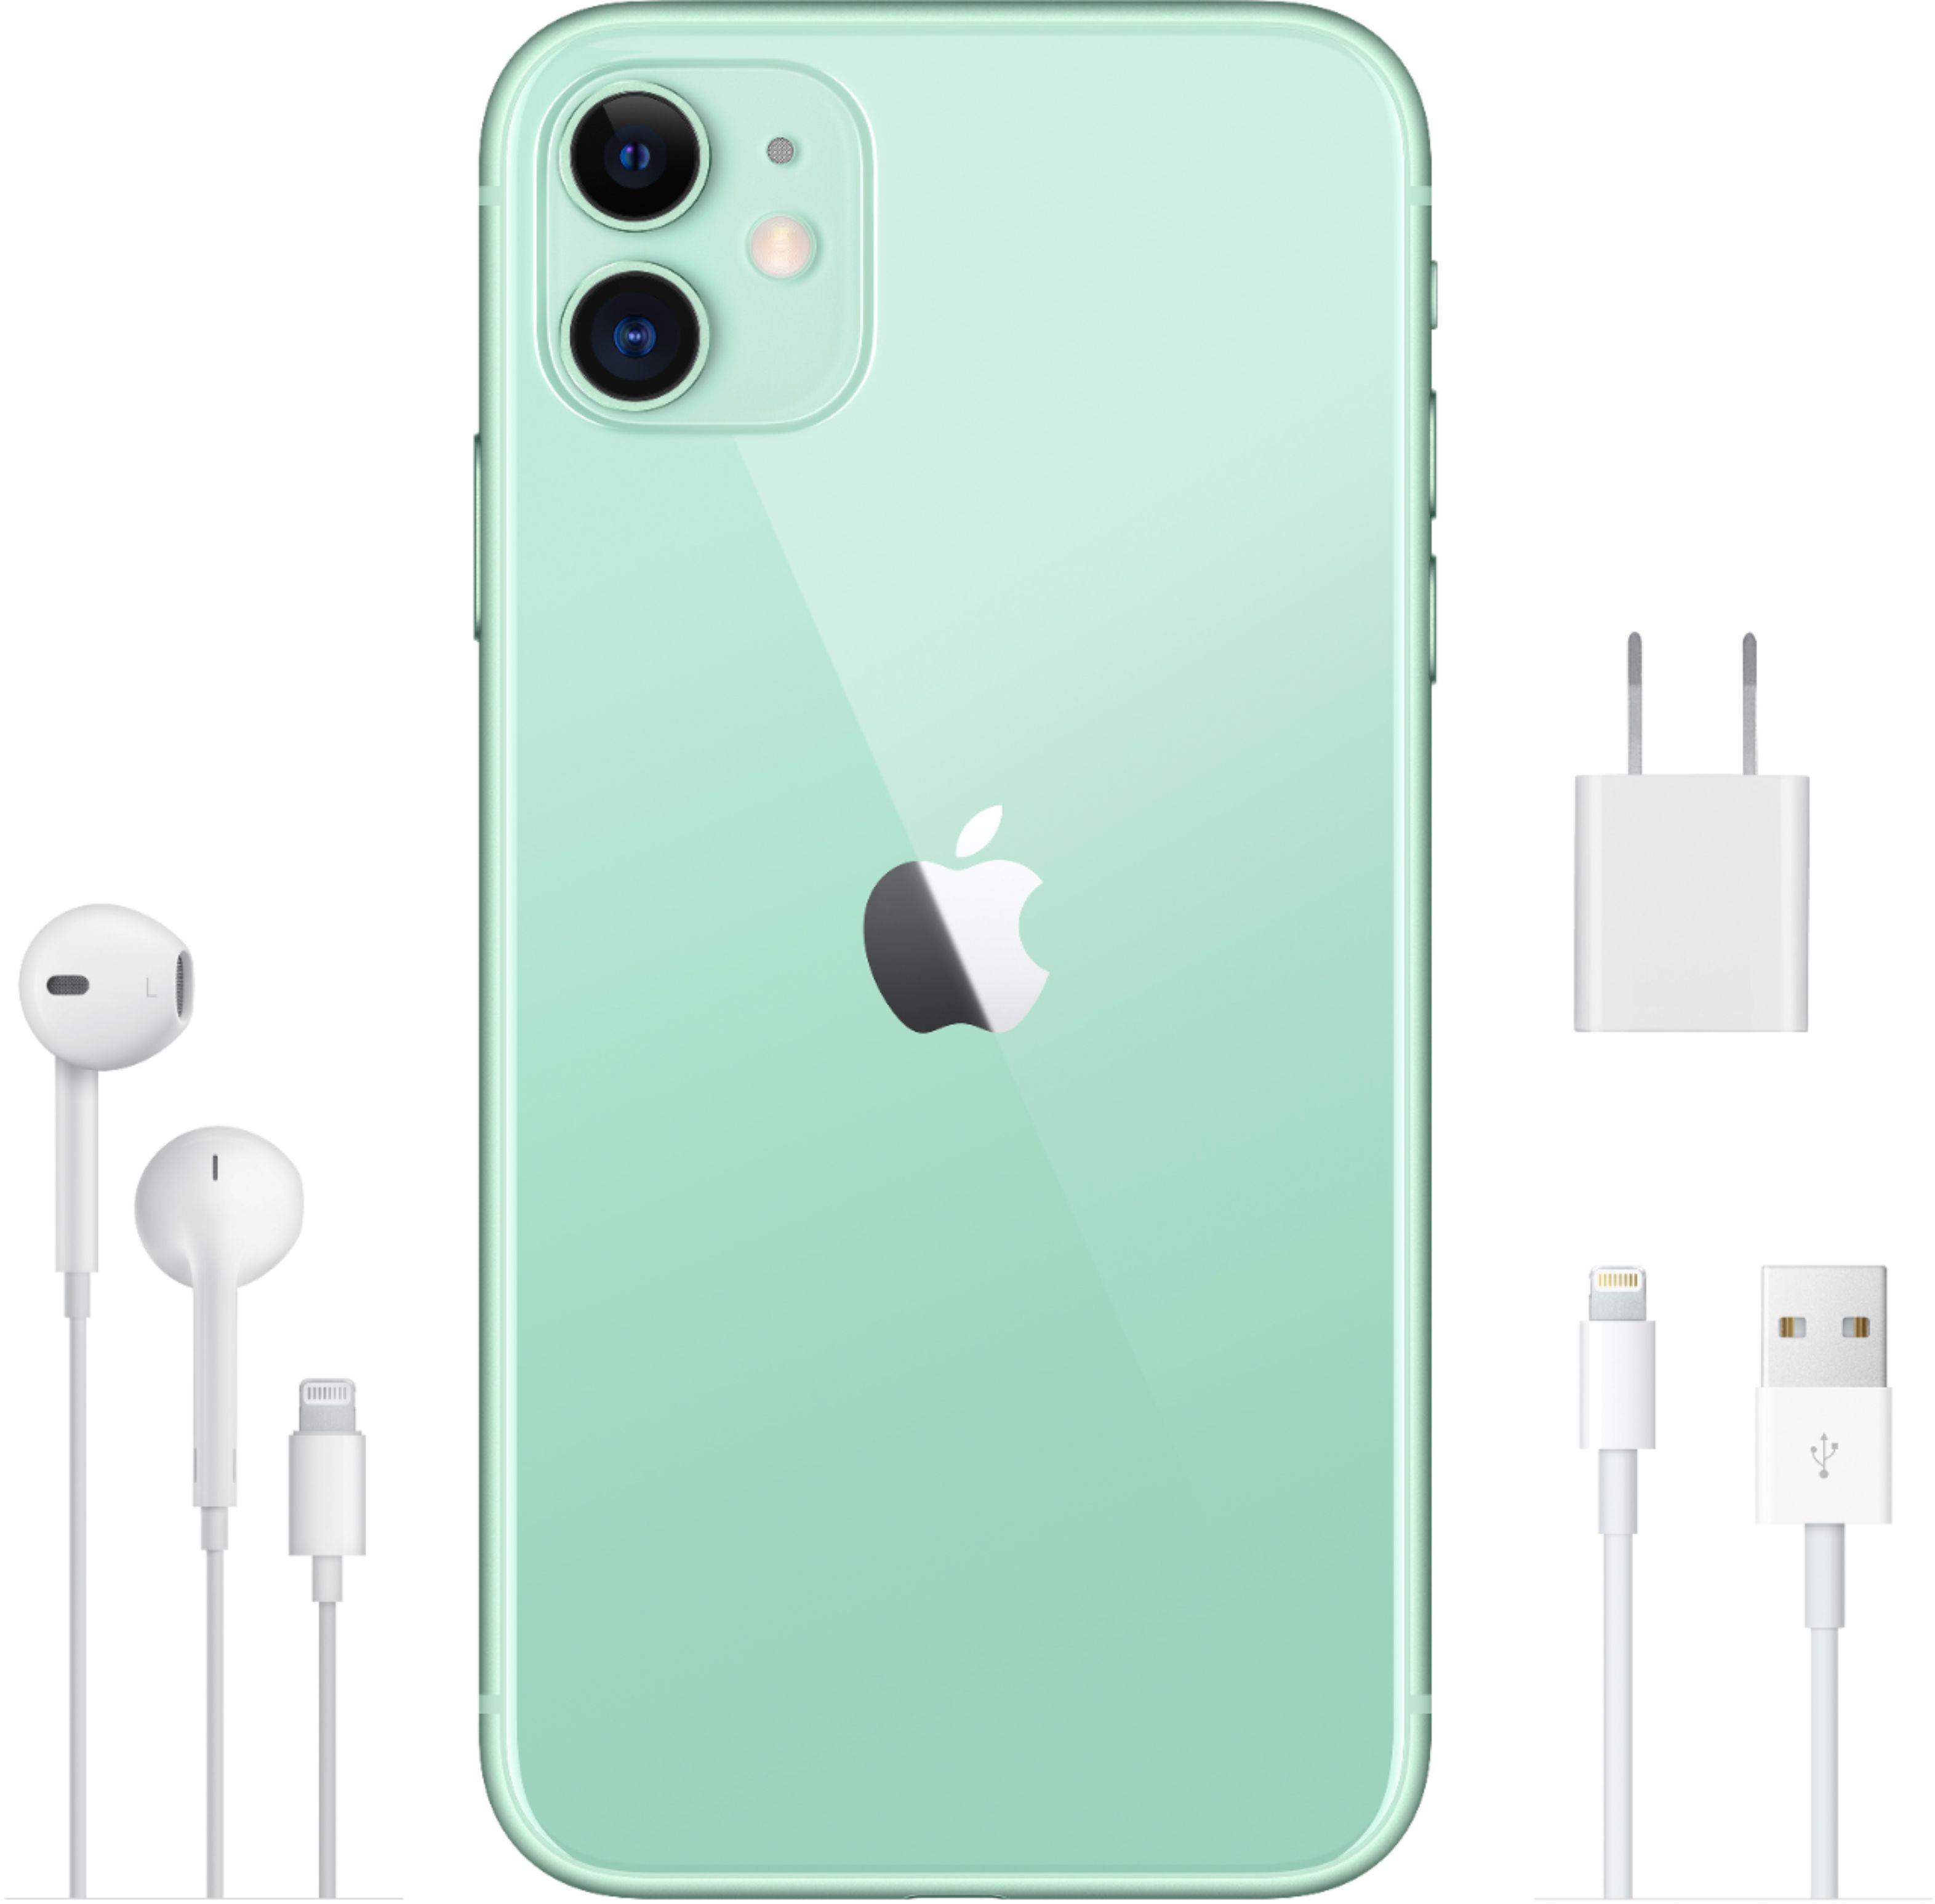 Apple Iphone 11 128gb Green Verizon Mwlk2ll A Best Buy